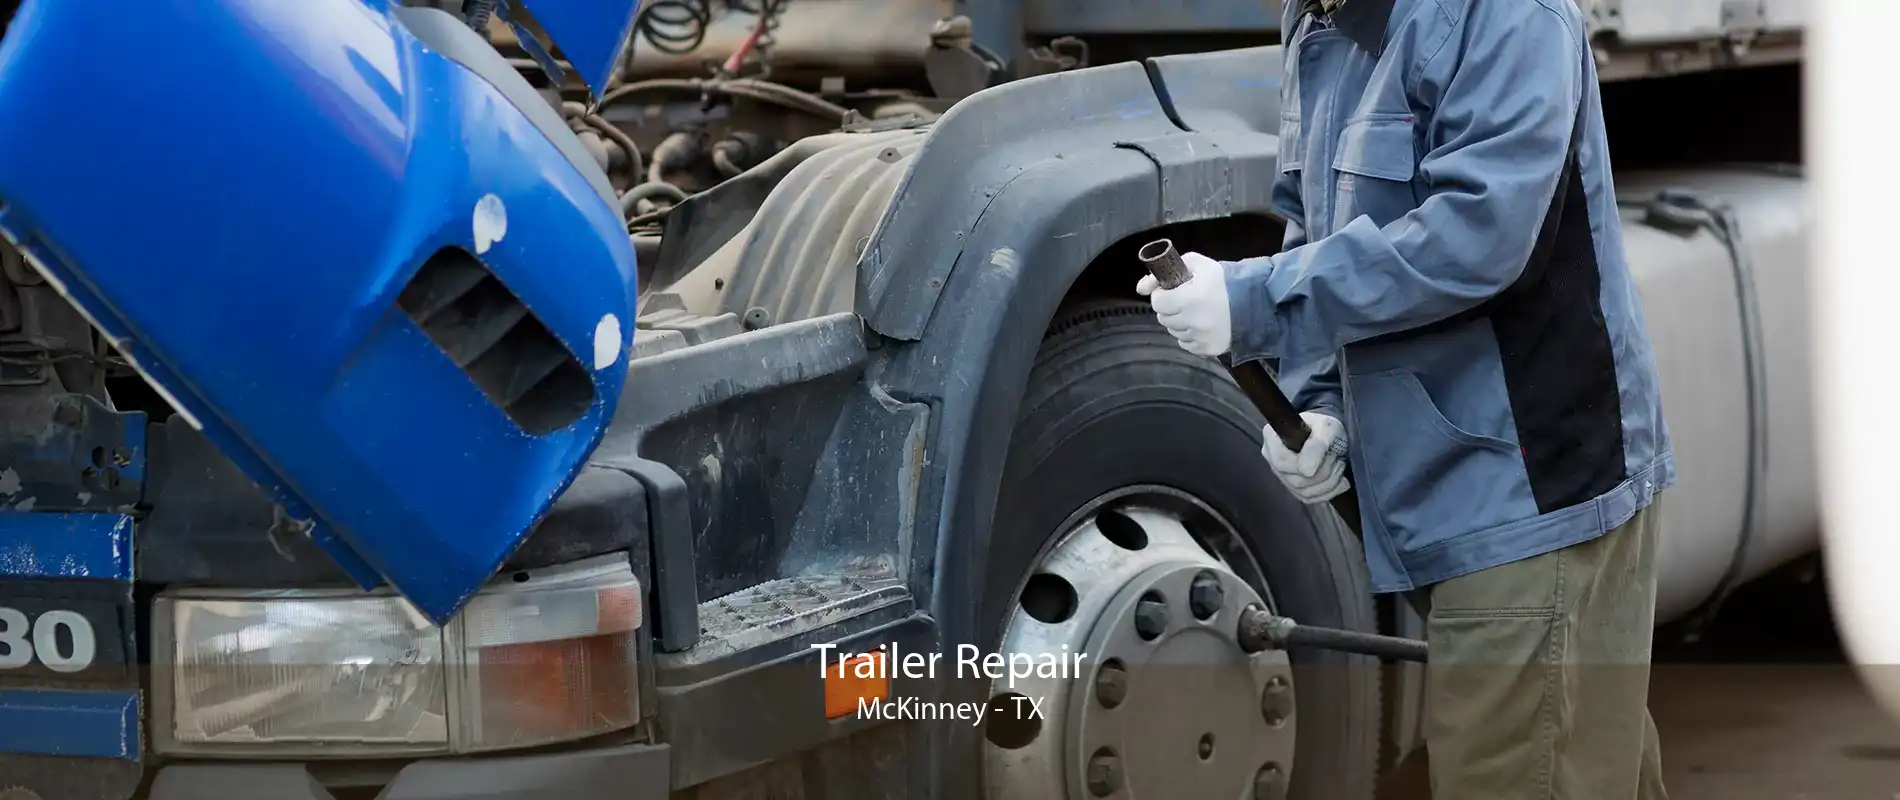 Trailer Repair McKinney - TX